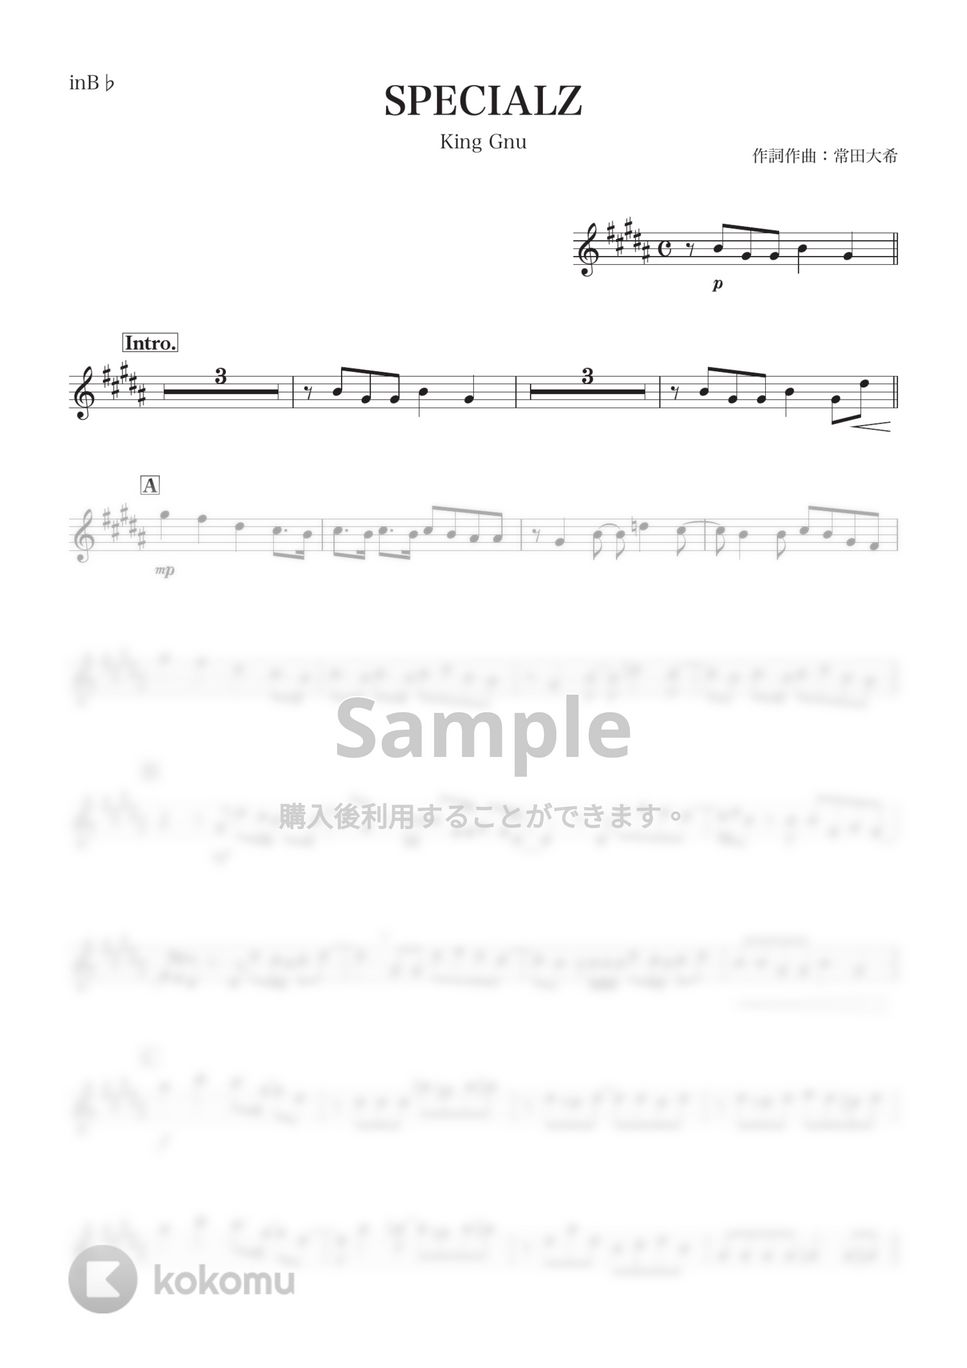 King Gnu - 【呪術廻戦】SPECIALZ (B♭) by kanamusic